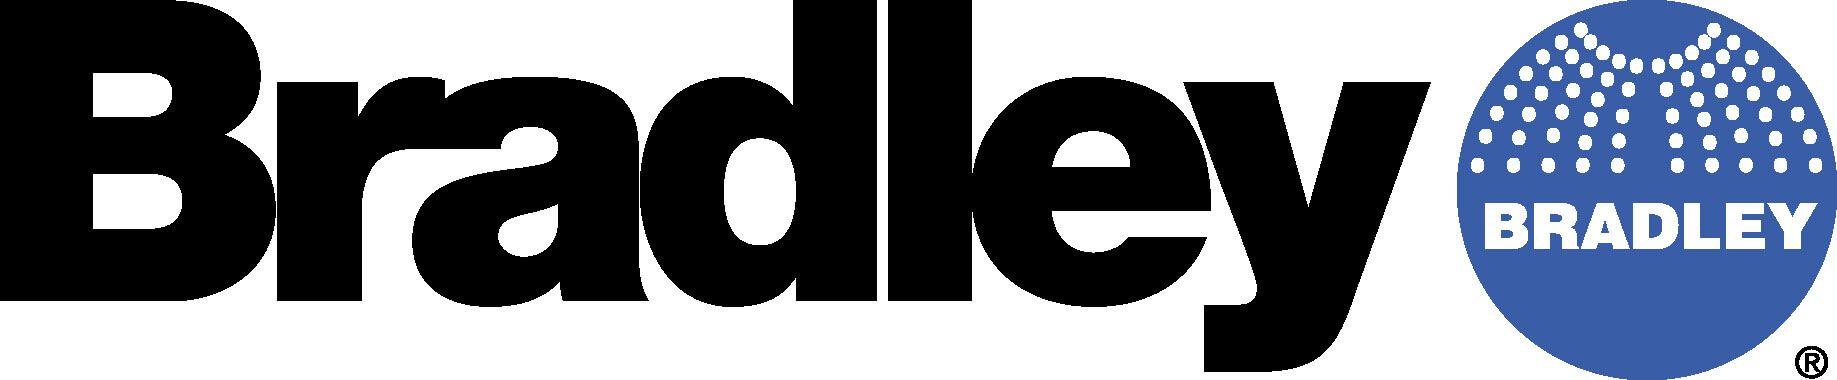 Bradley Logo - bradley-logo - Granite State Specialties